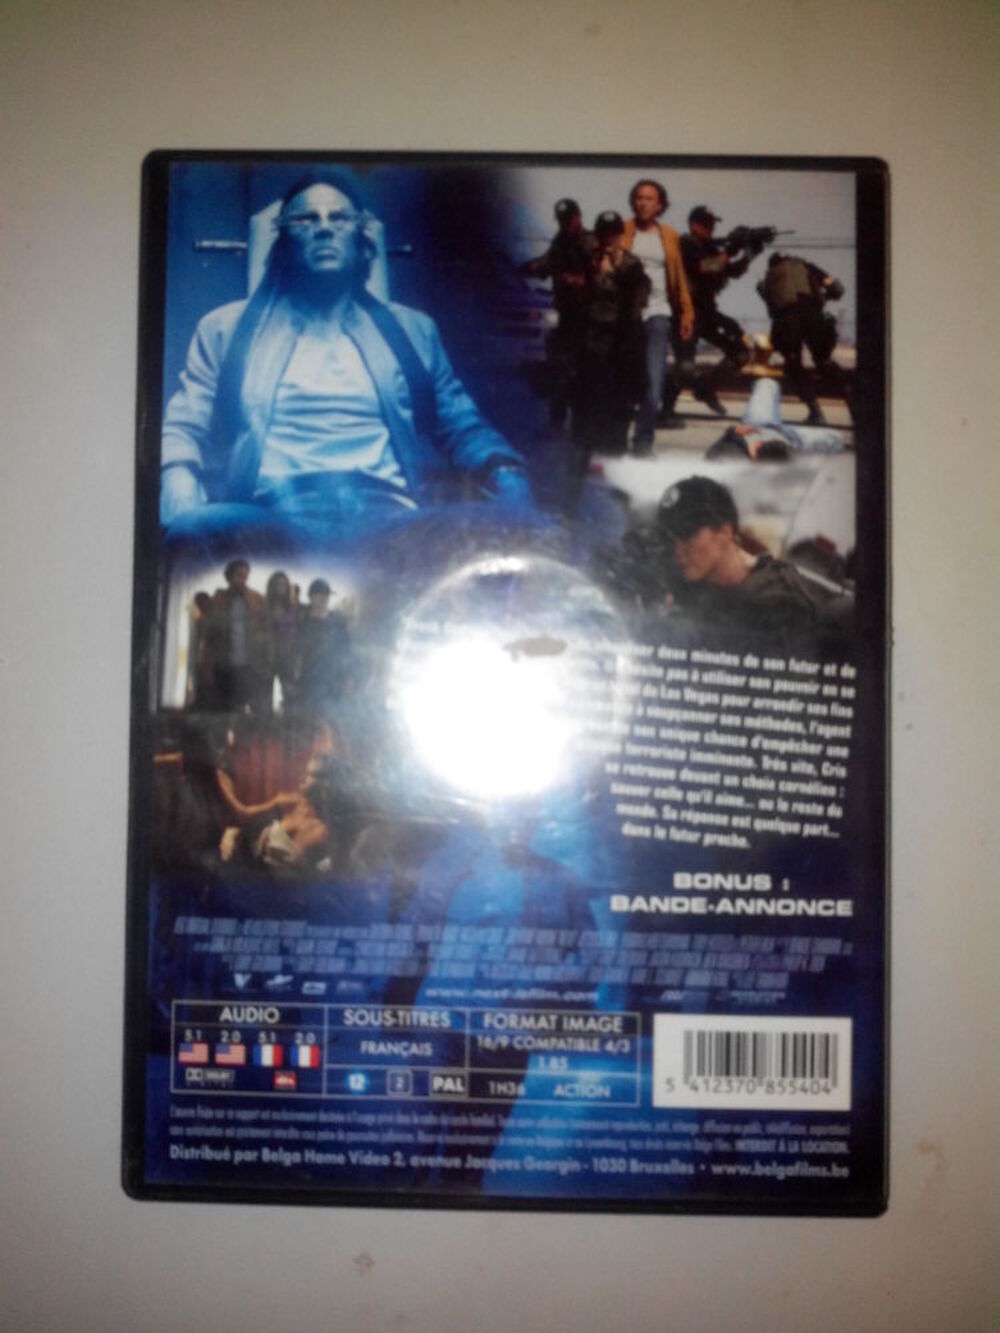 DVD Next
Nicolas Cage
Excellent etat
2007
DVD Zone 2
DVD et blu-ray